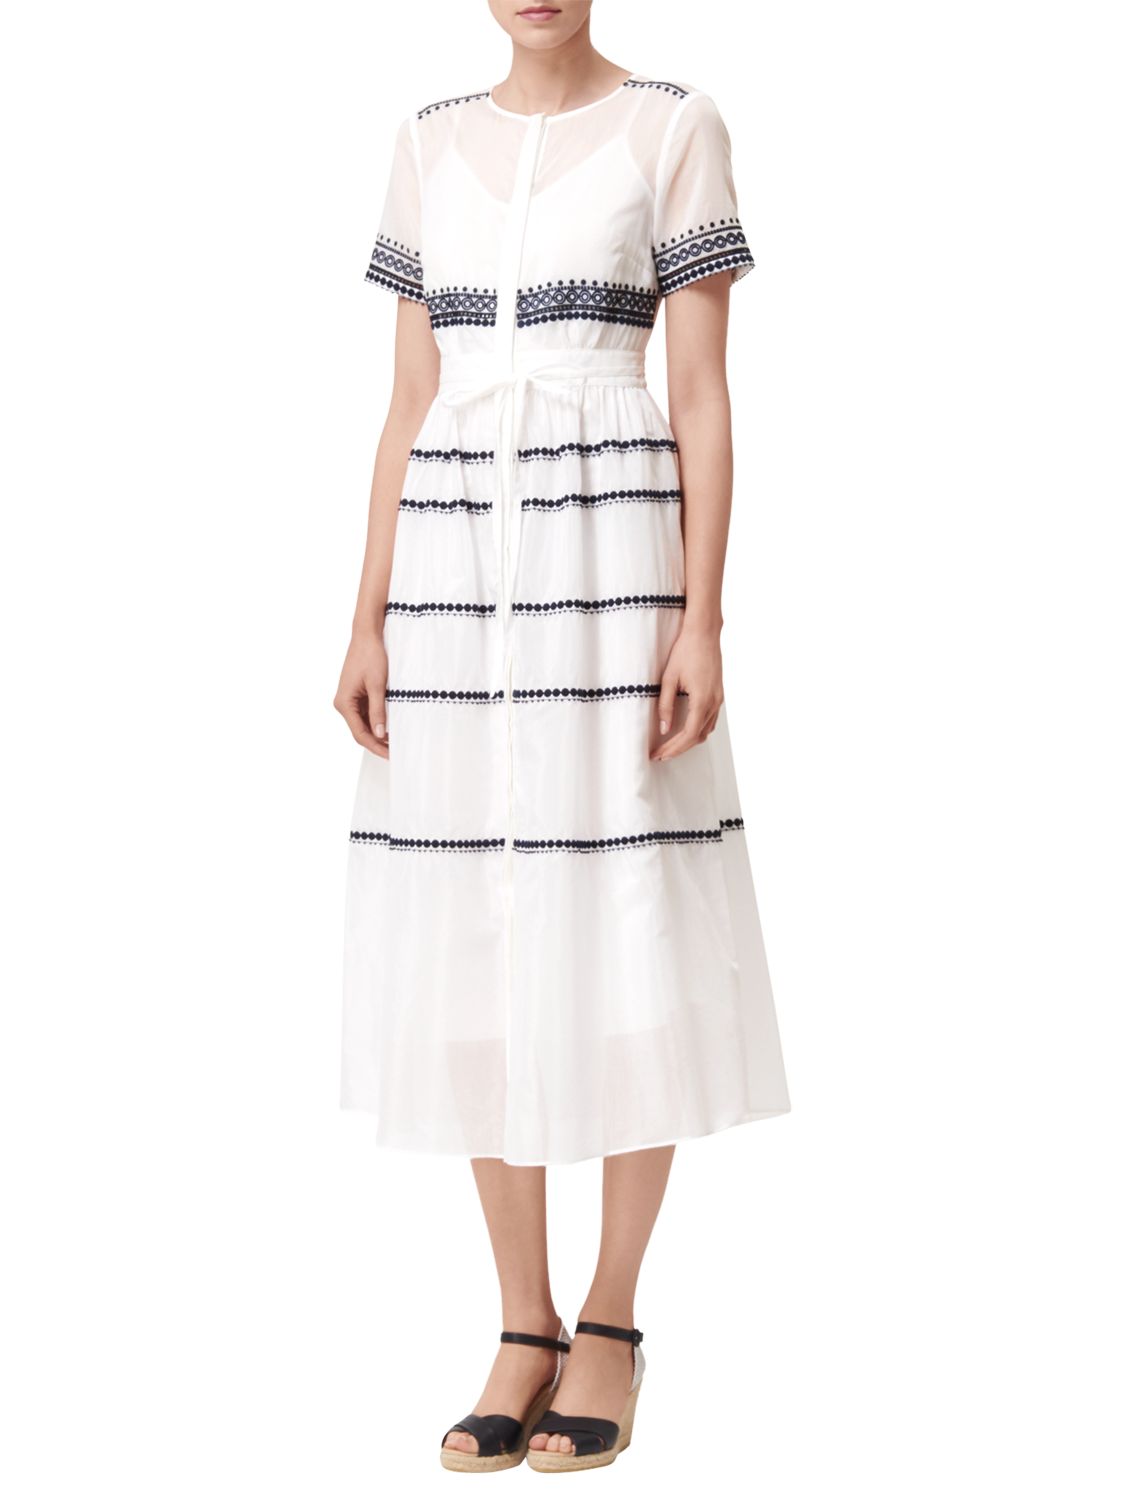 L.K. Bennett Tarley Embroidered Dress, Cream, 14